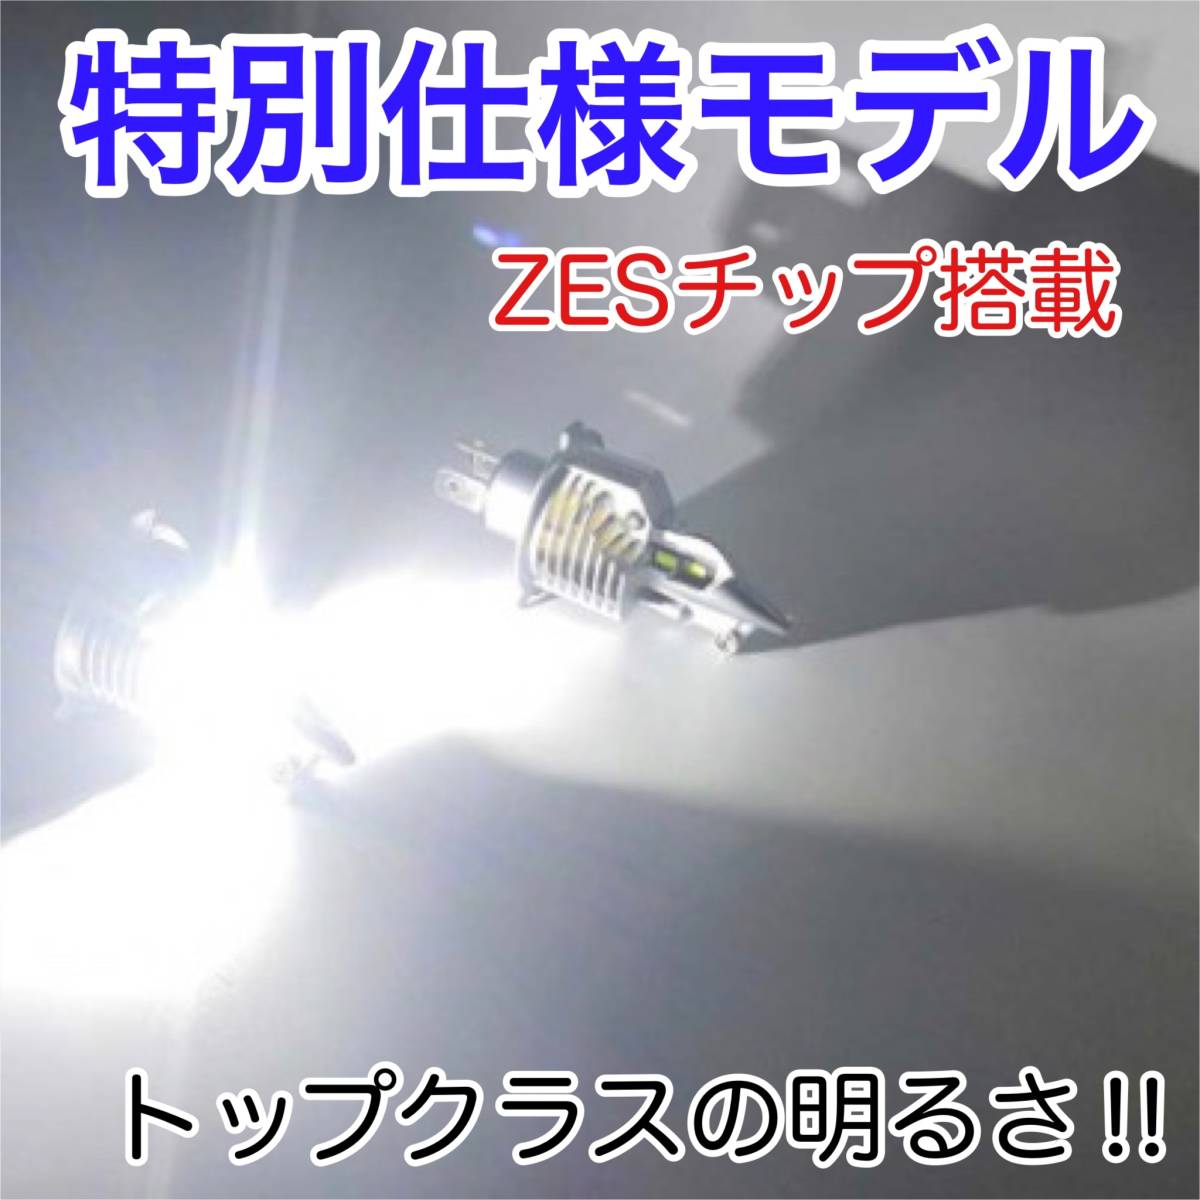 KAWASAKI カワサキ ZRX 1994-2008 BC-ZR400E LEDヘッドライト H4 Hi/Lo バルブ バイク用 1灯 S25 テールランプ2個 ホワイト 交換用